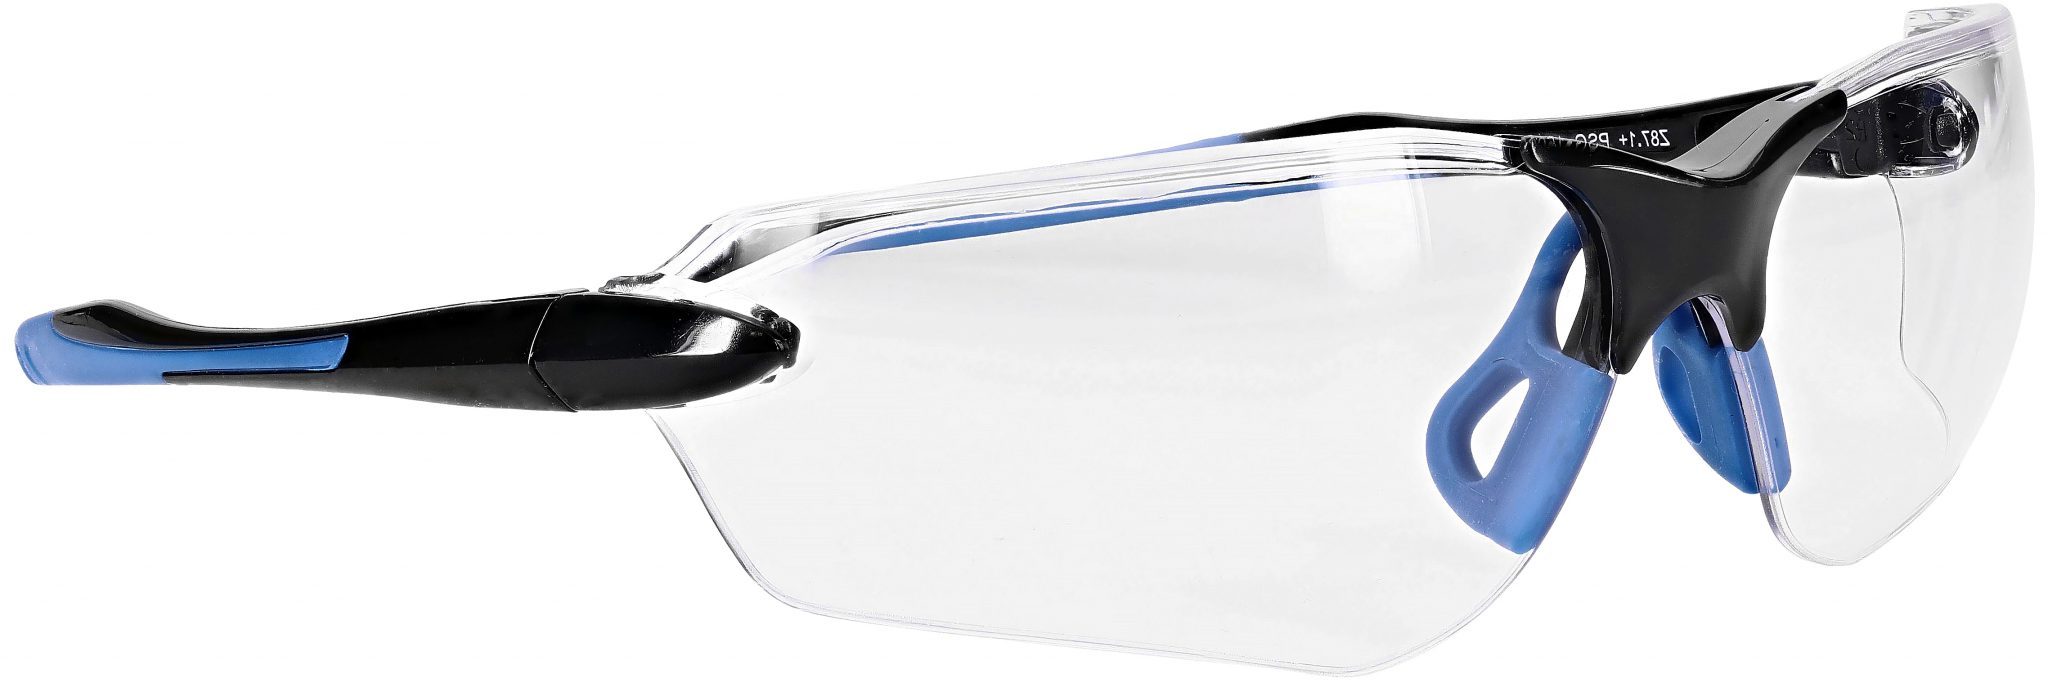 Psg Eyewear  PSG FCS04 Small  Safety Glasses Online  Prescription